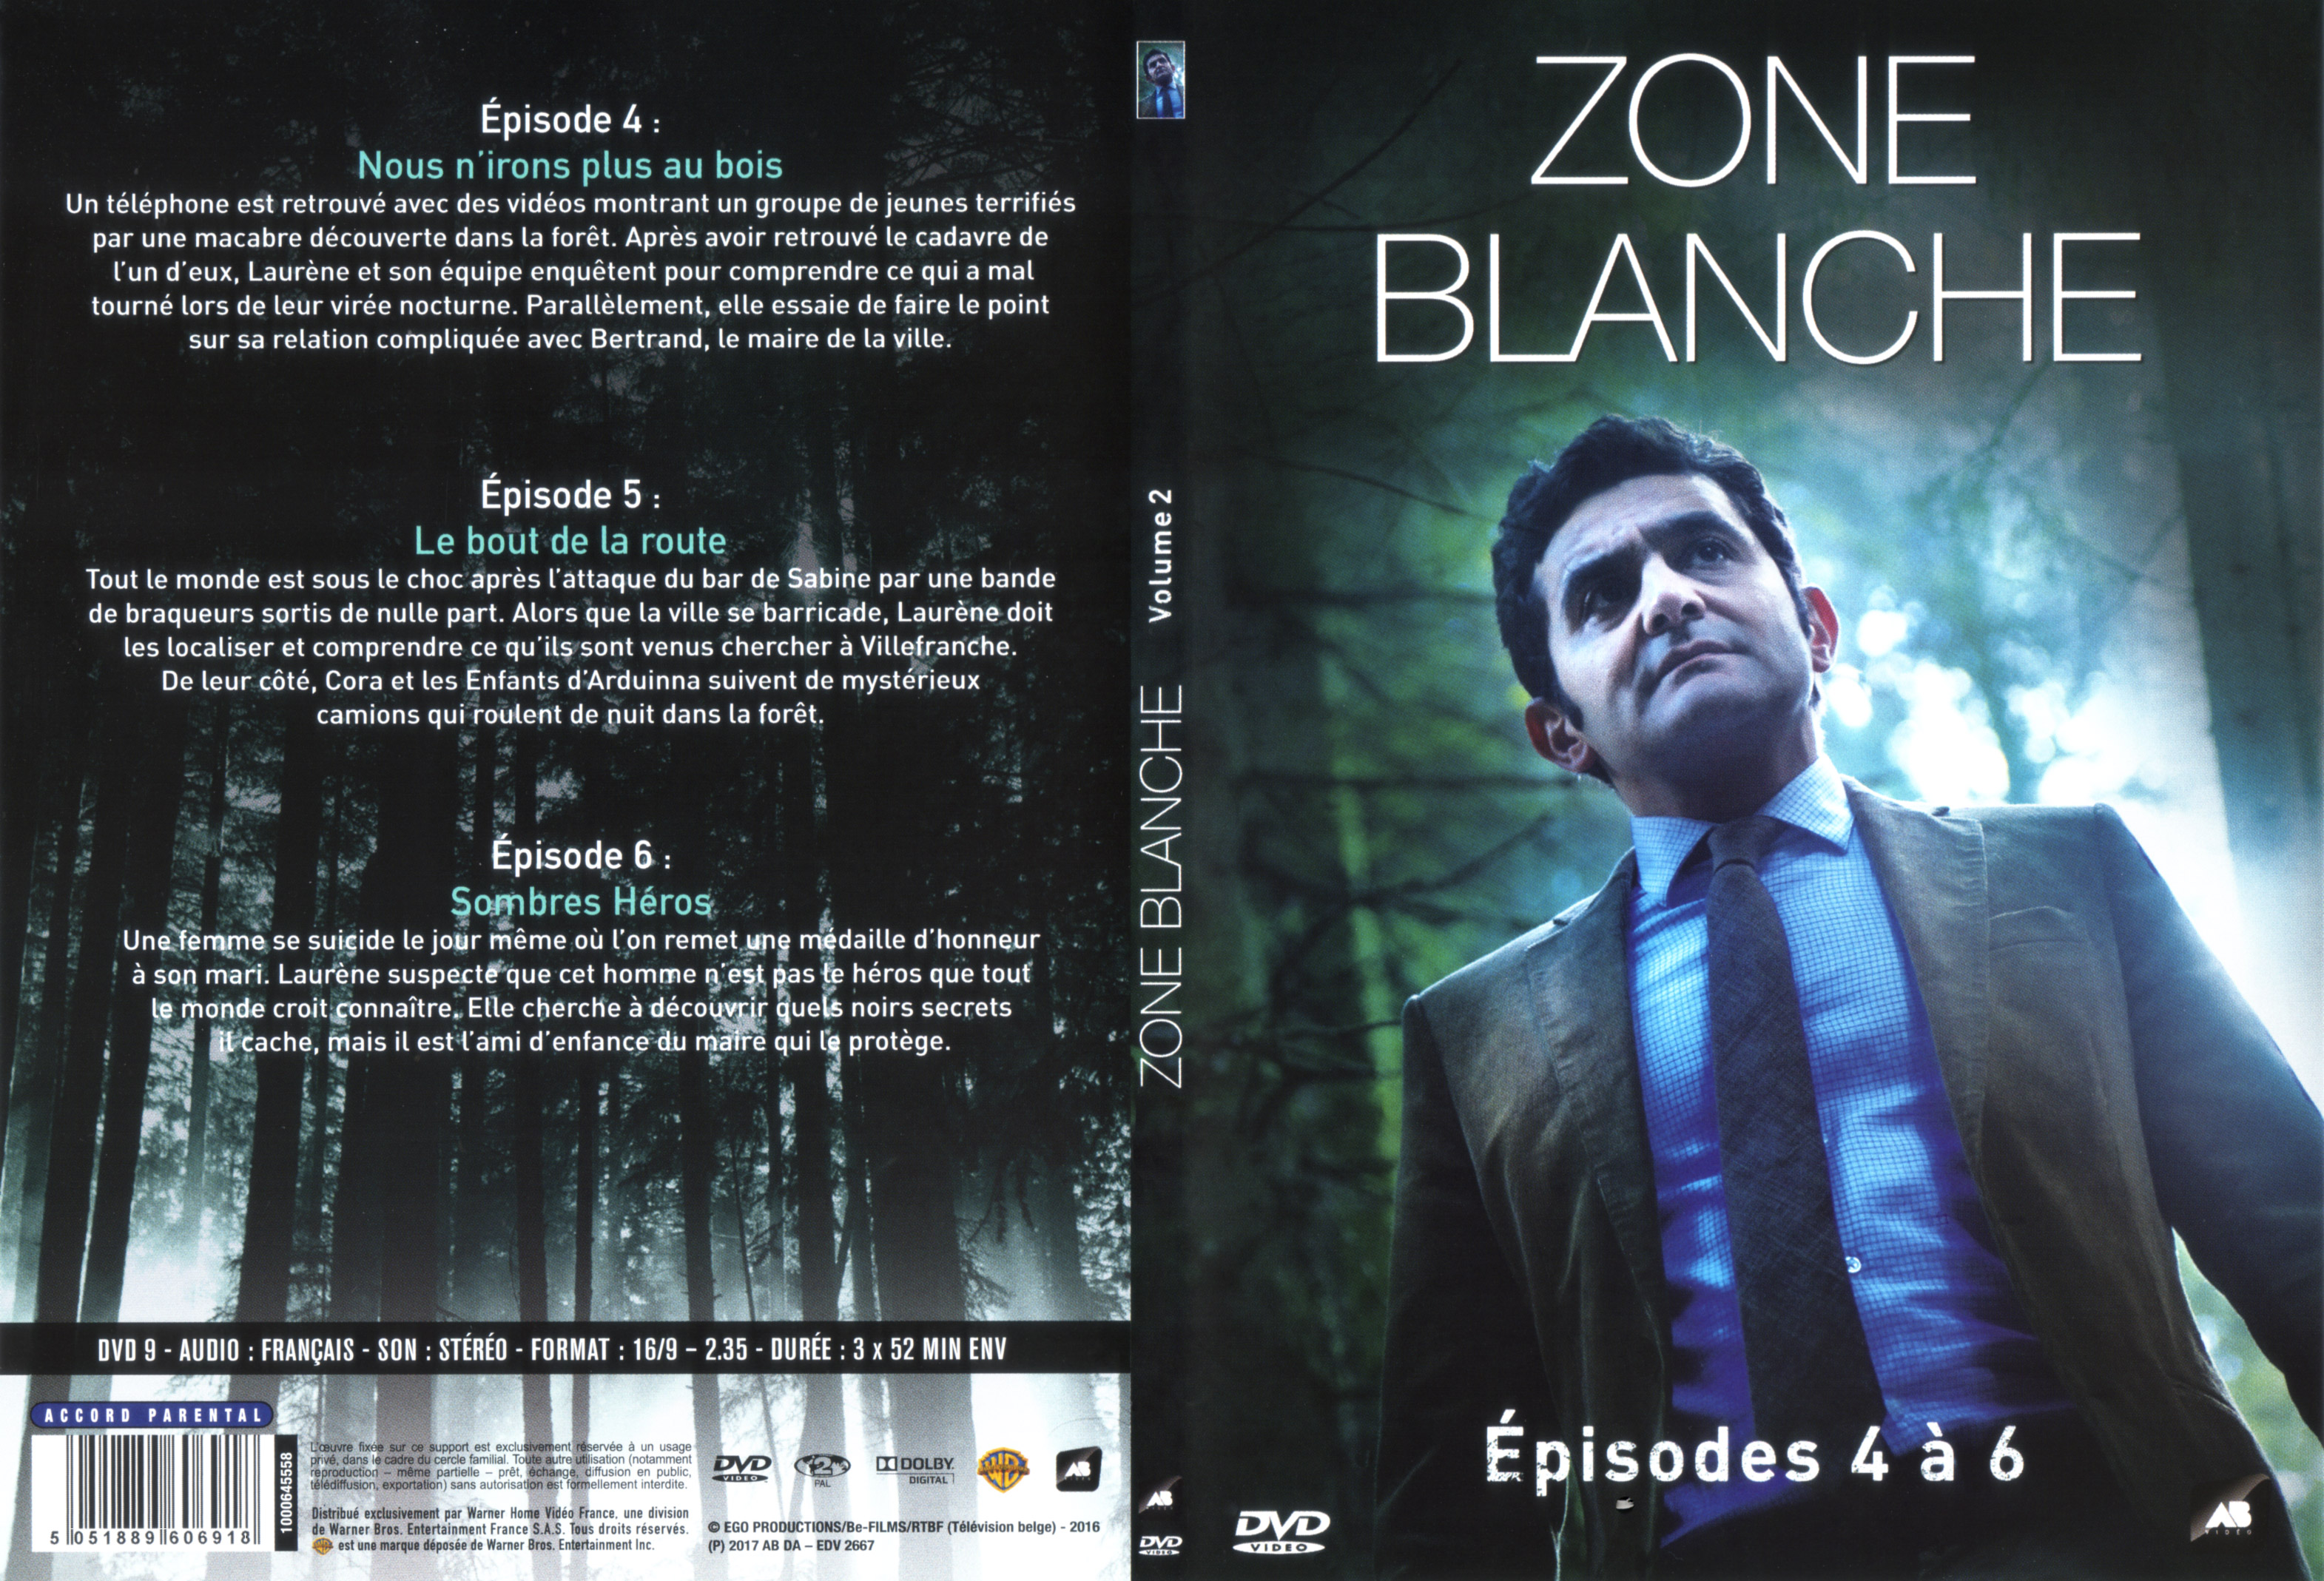 Jaquette DVD Zone blanche pisode 4-6